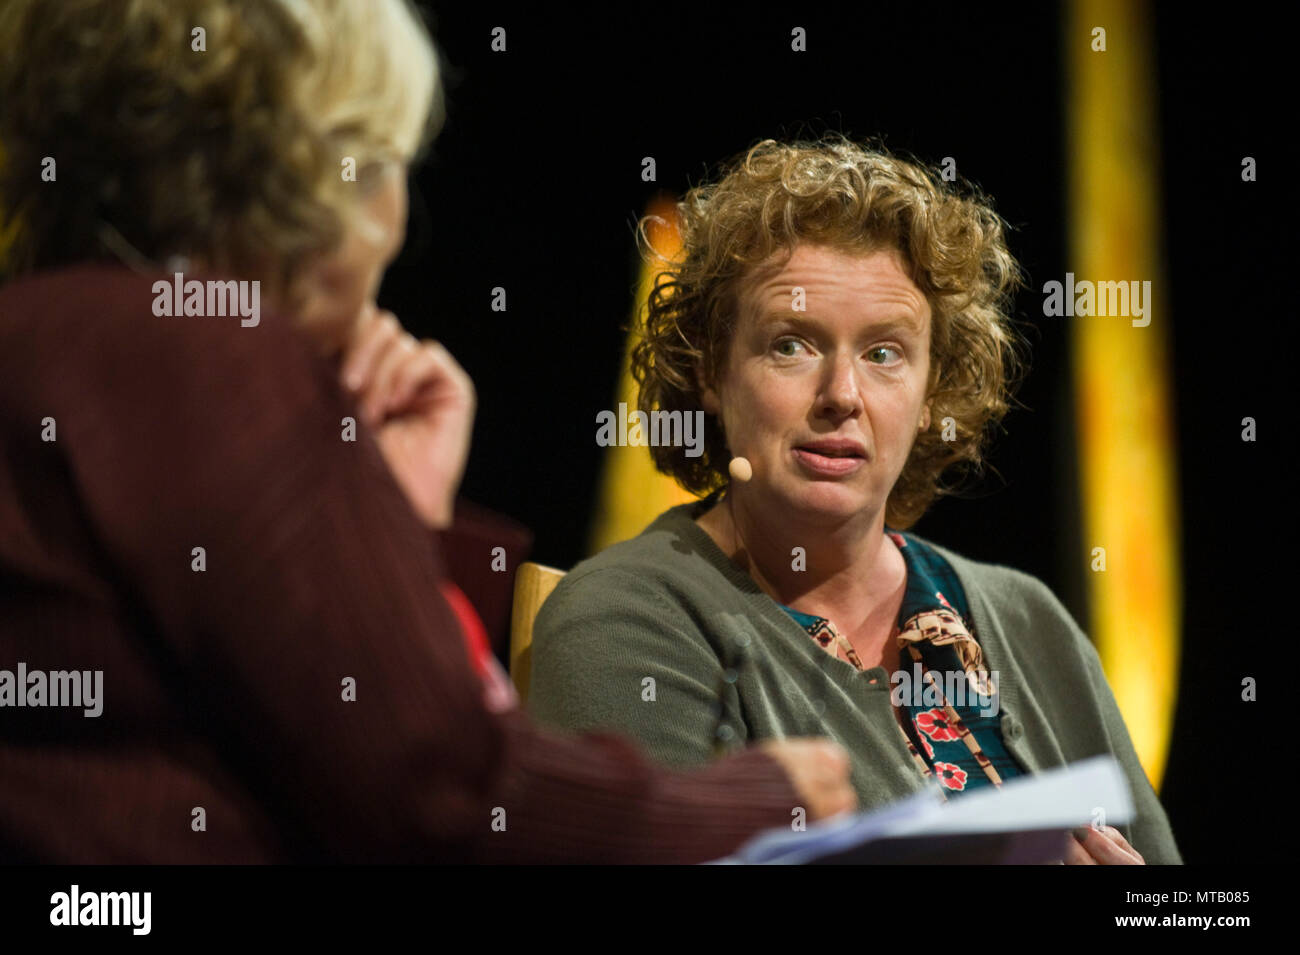 Suzanne O'Sullivan neurologist speaking to Rosie Boycott on stage at Hay Festival 2018 Hay-on-Wye Powys Wales UK Stock Photo